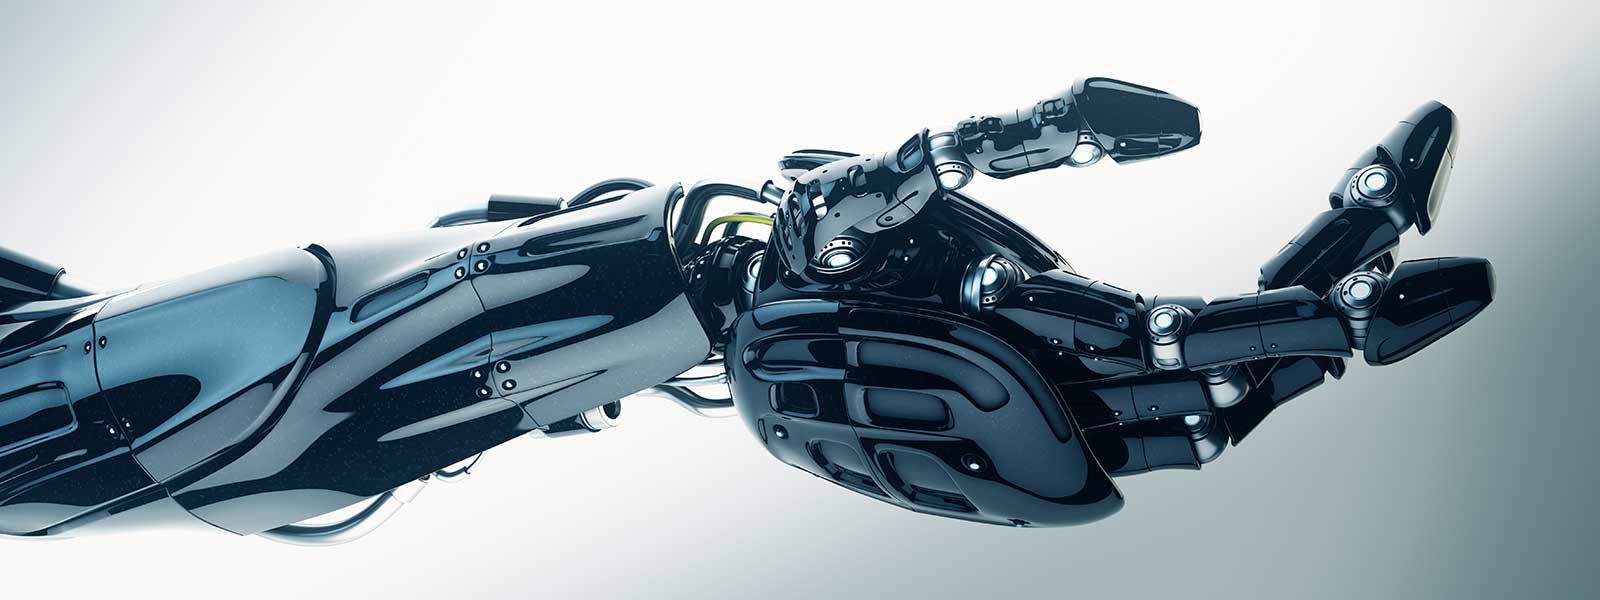 Futuristic image of a robotic hand.